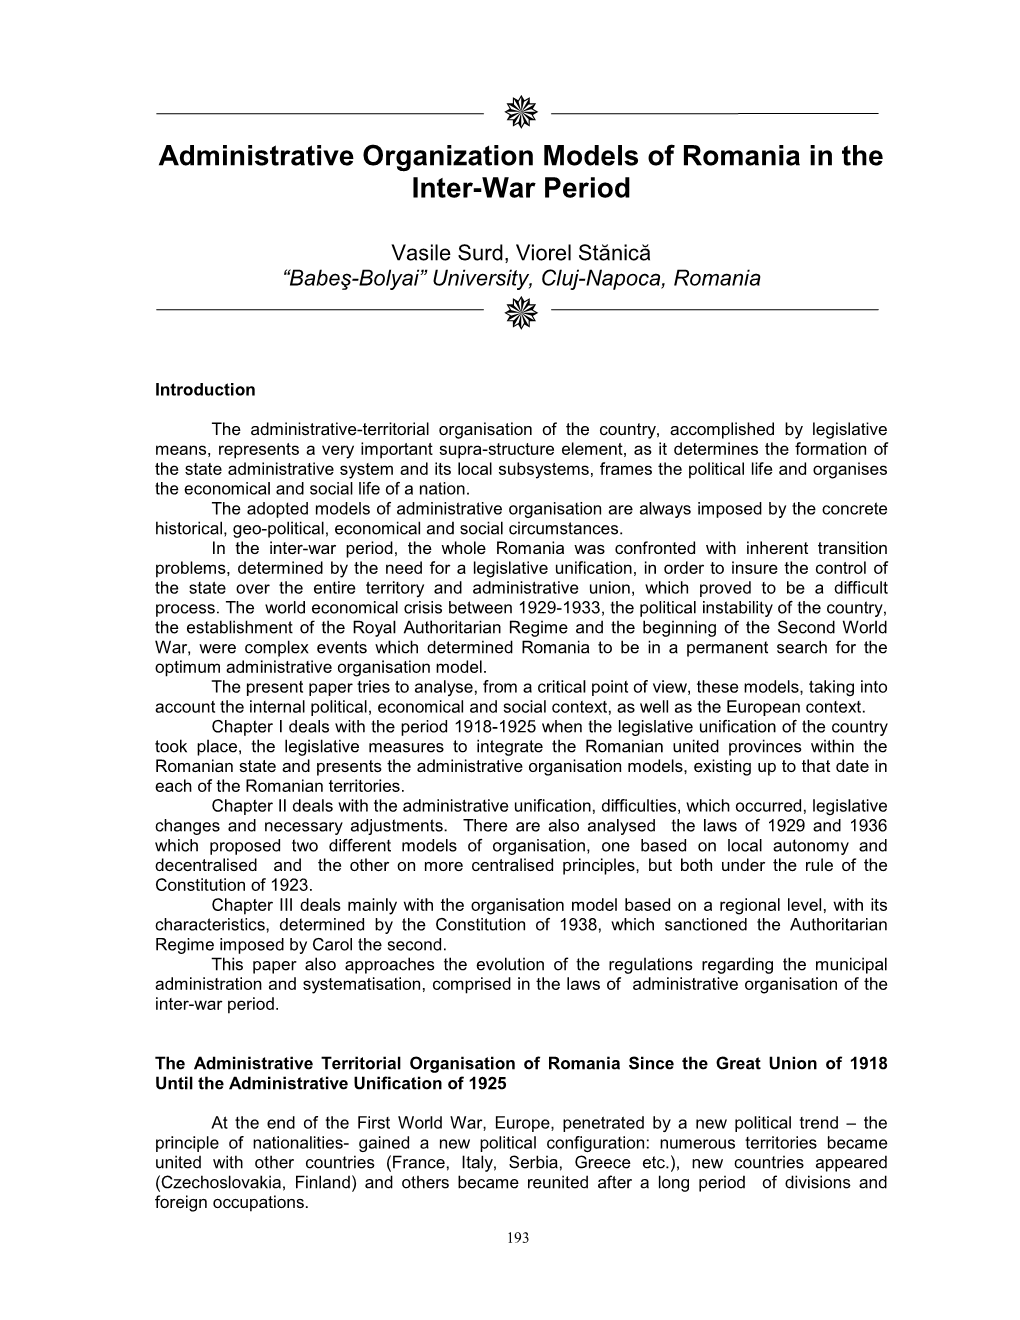 Administrative Organization Models of Romania in the Inter-War Period